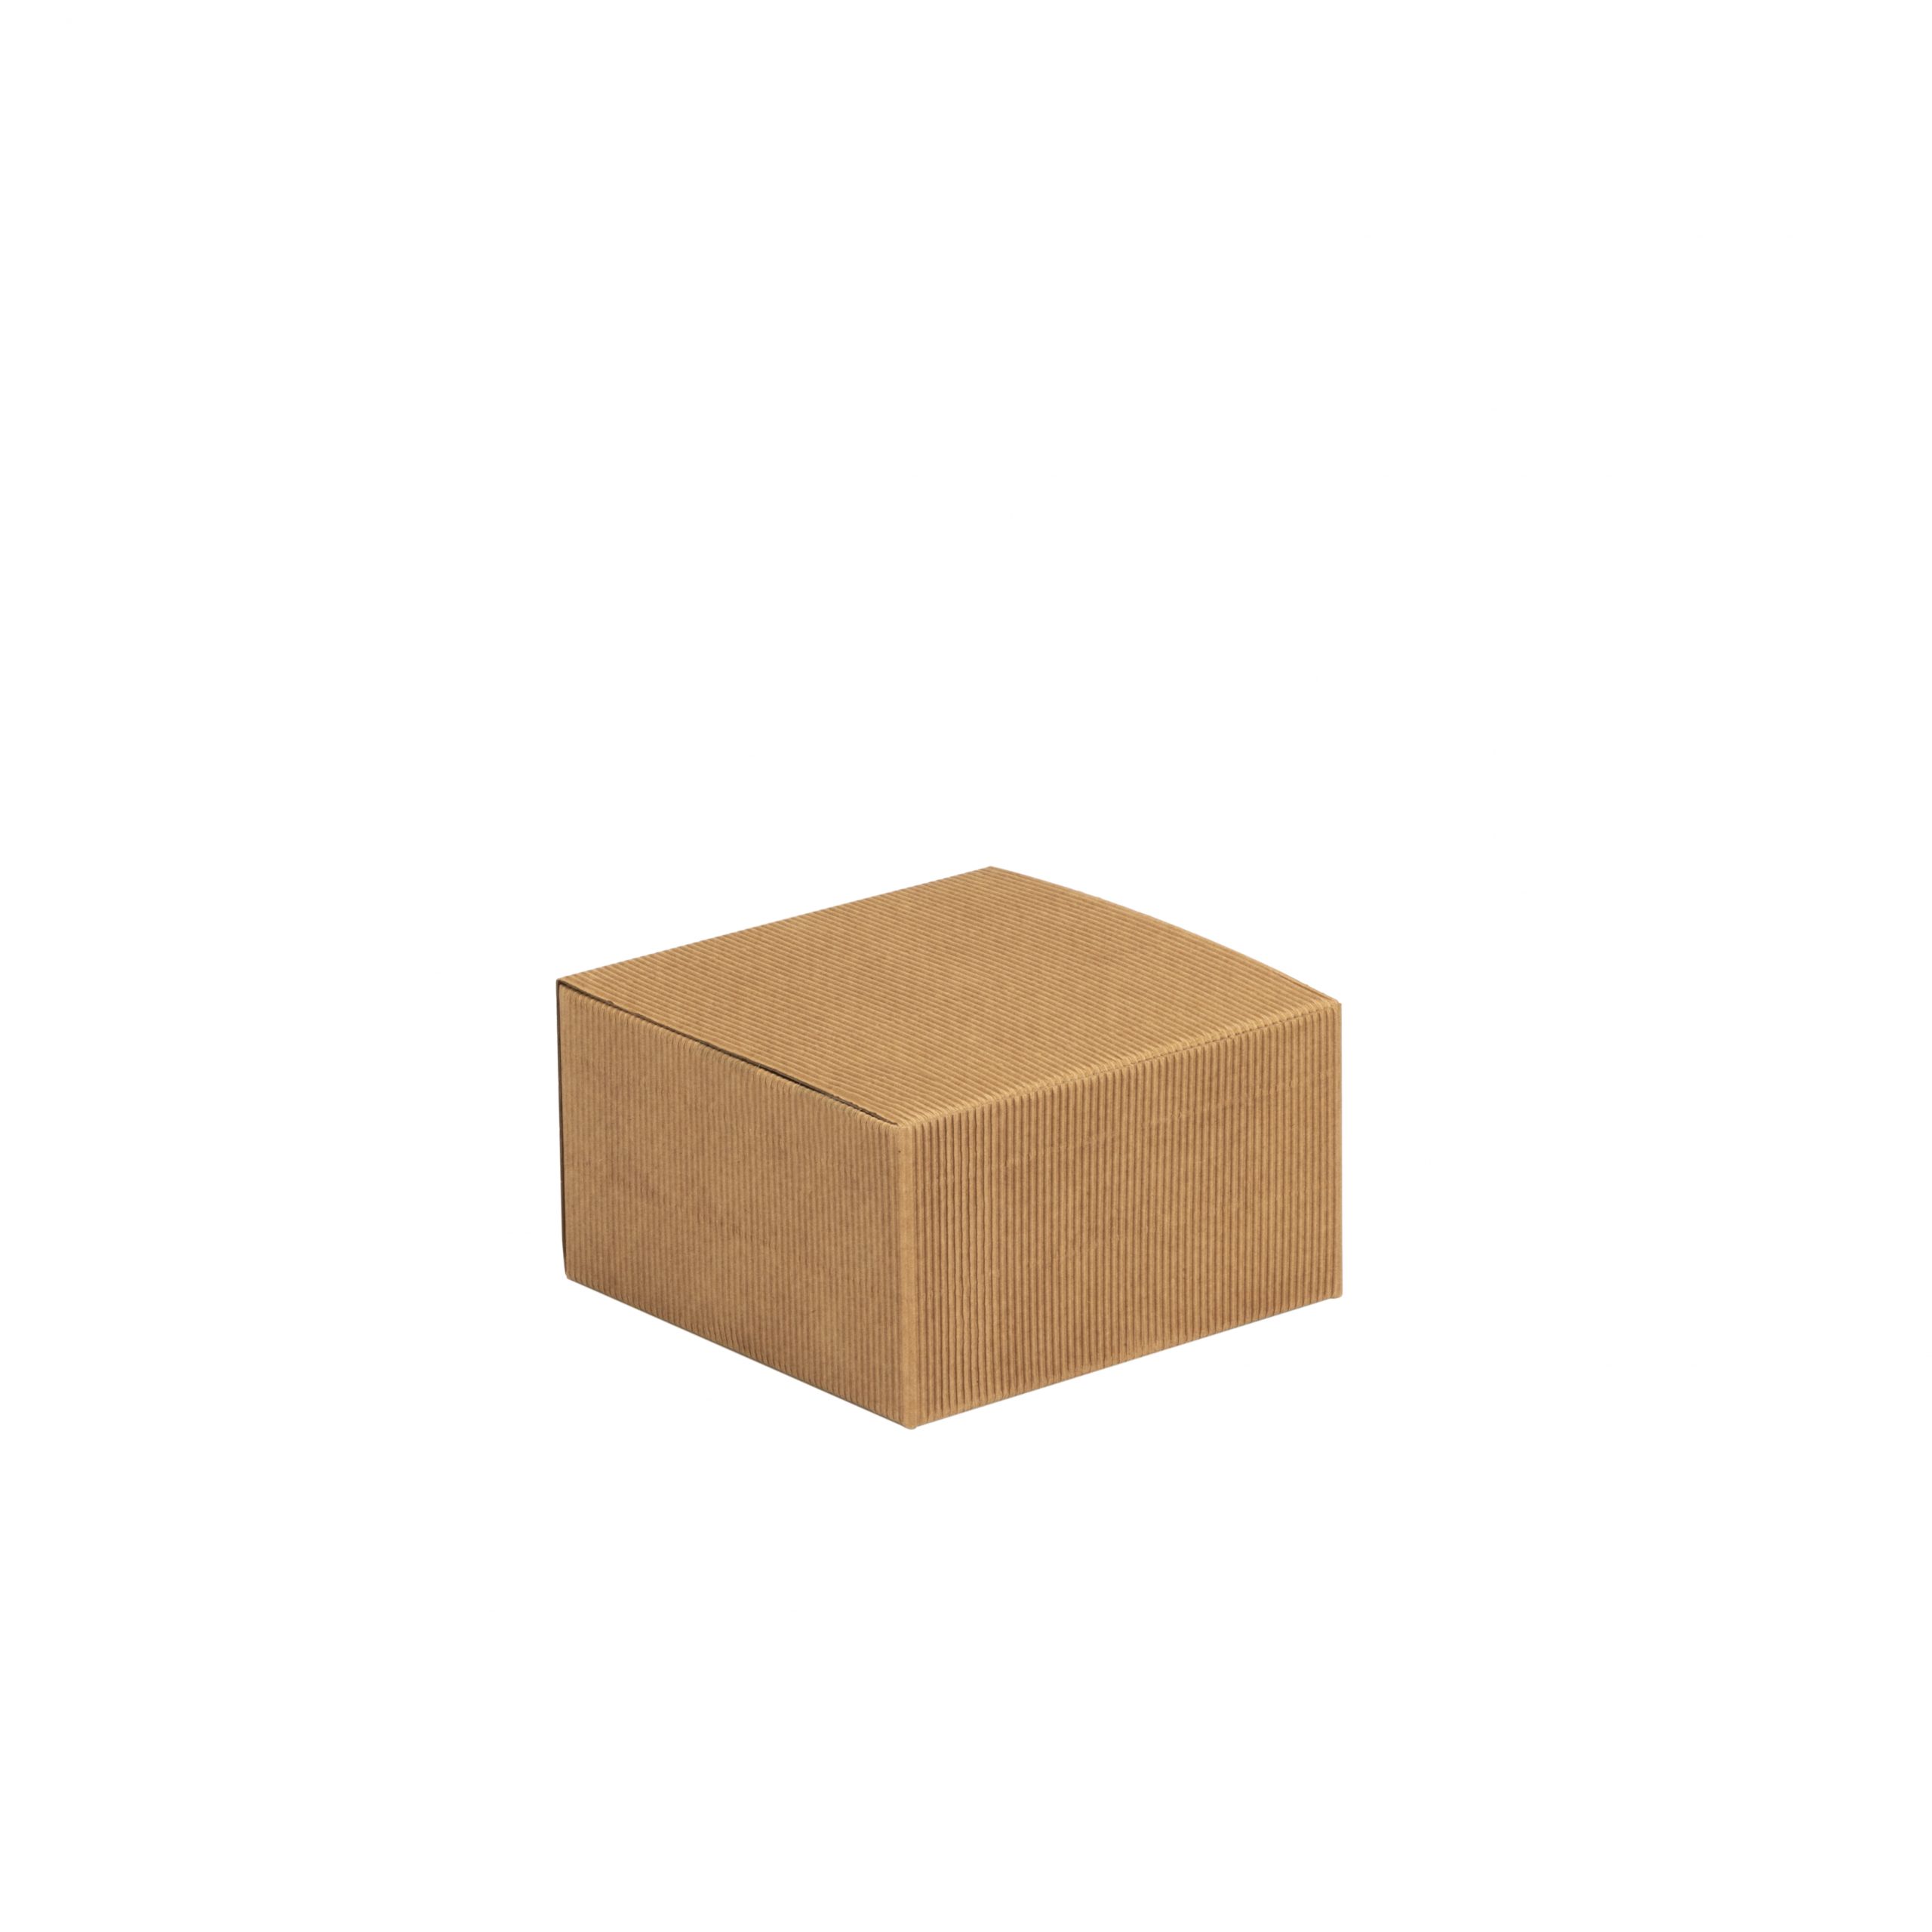 Square Gift Box. 100x100x100mm